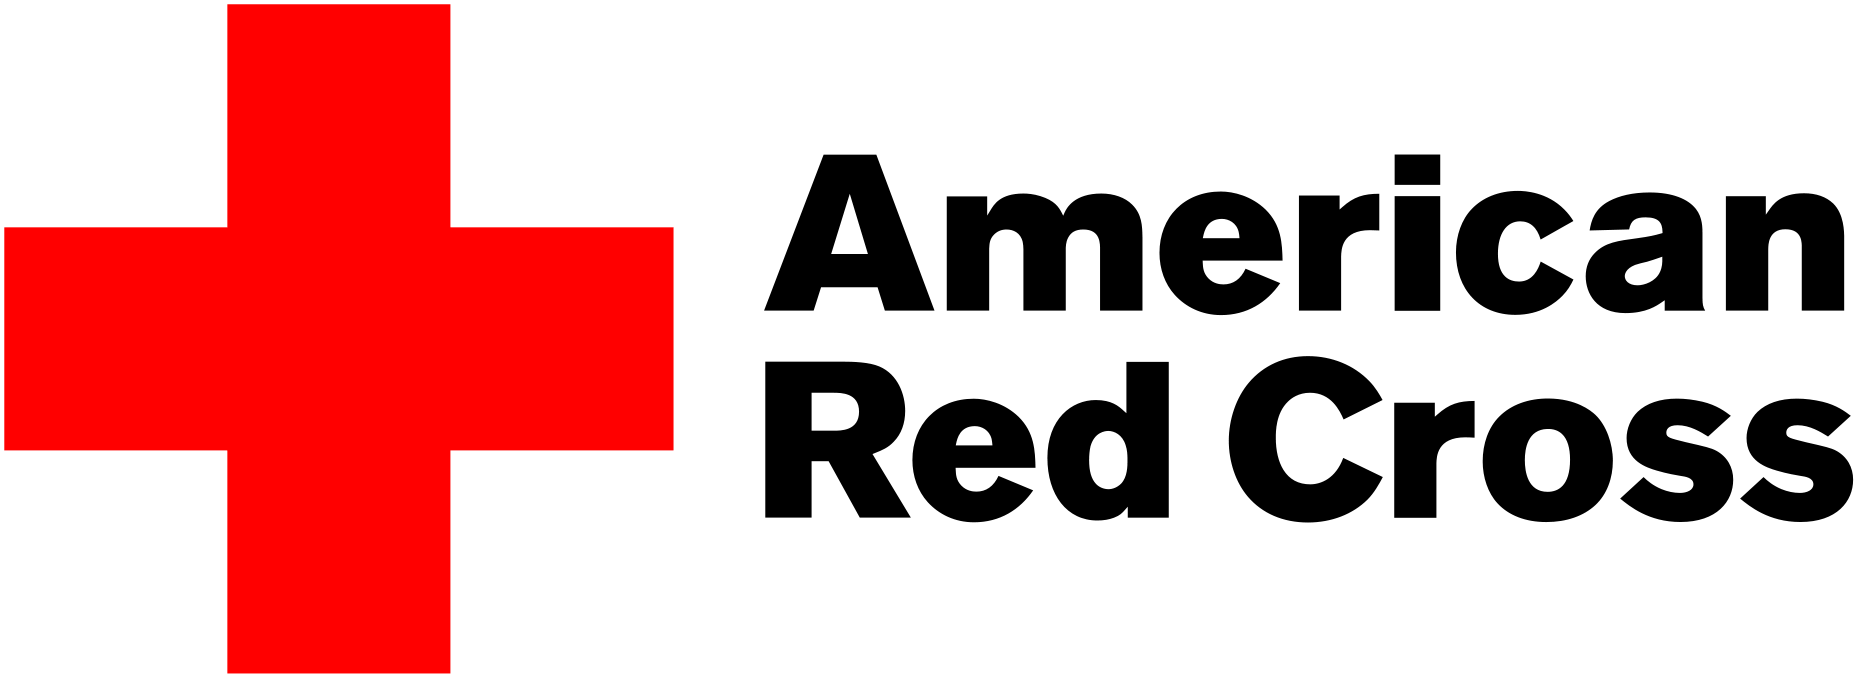 American Red Crss Logo - American Red Cross Logo, American Red Cross Symbol, Meaning, History ...